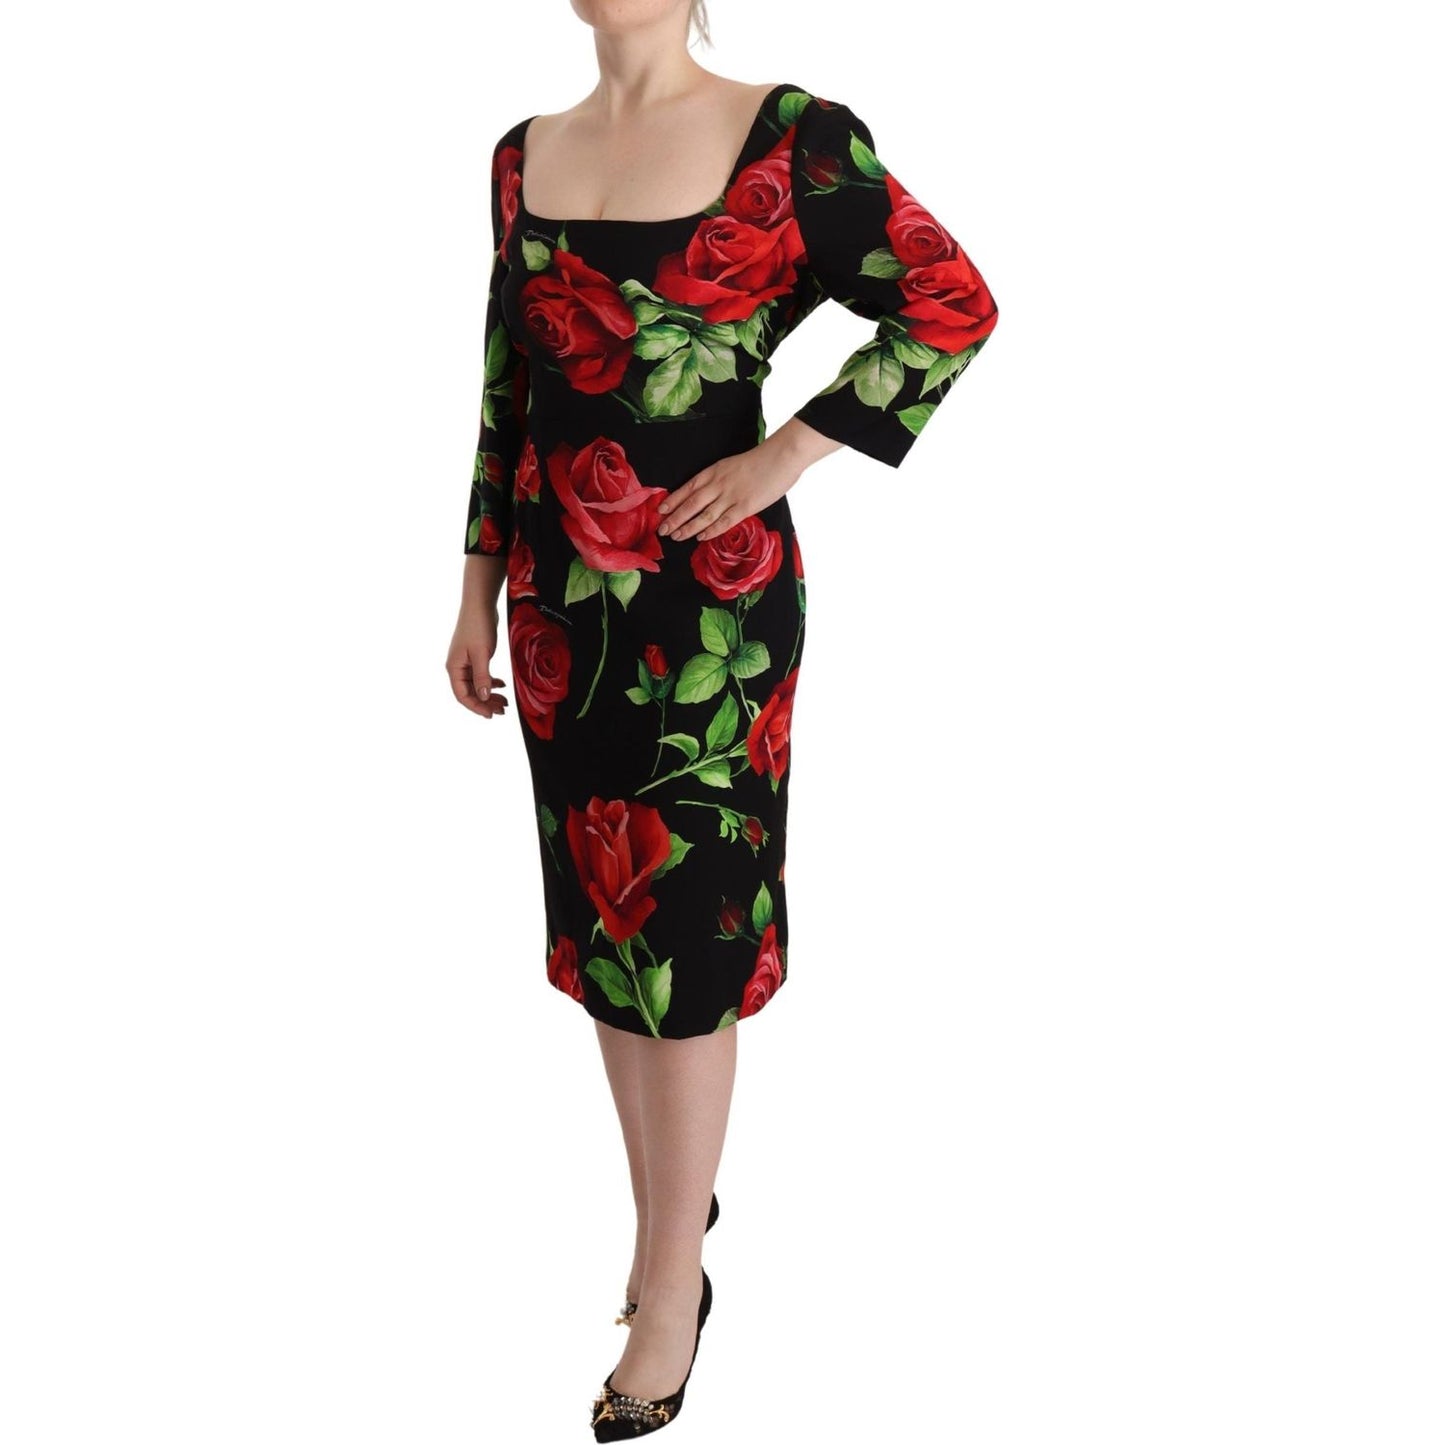 Dolce & Gabbana Elegant Floral Print Silk Sheath Dress black-red-roses-sheath-stretch-silk-dress IMG_7946-scaled-1fd70c74-463.jpg